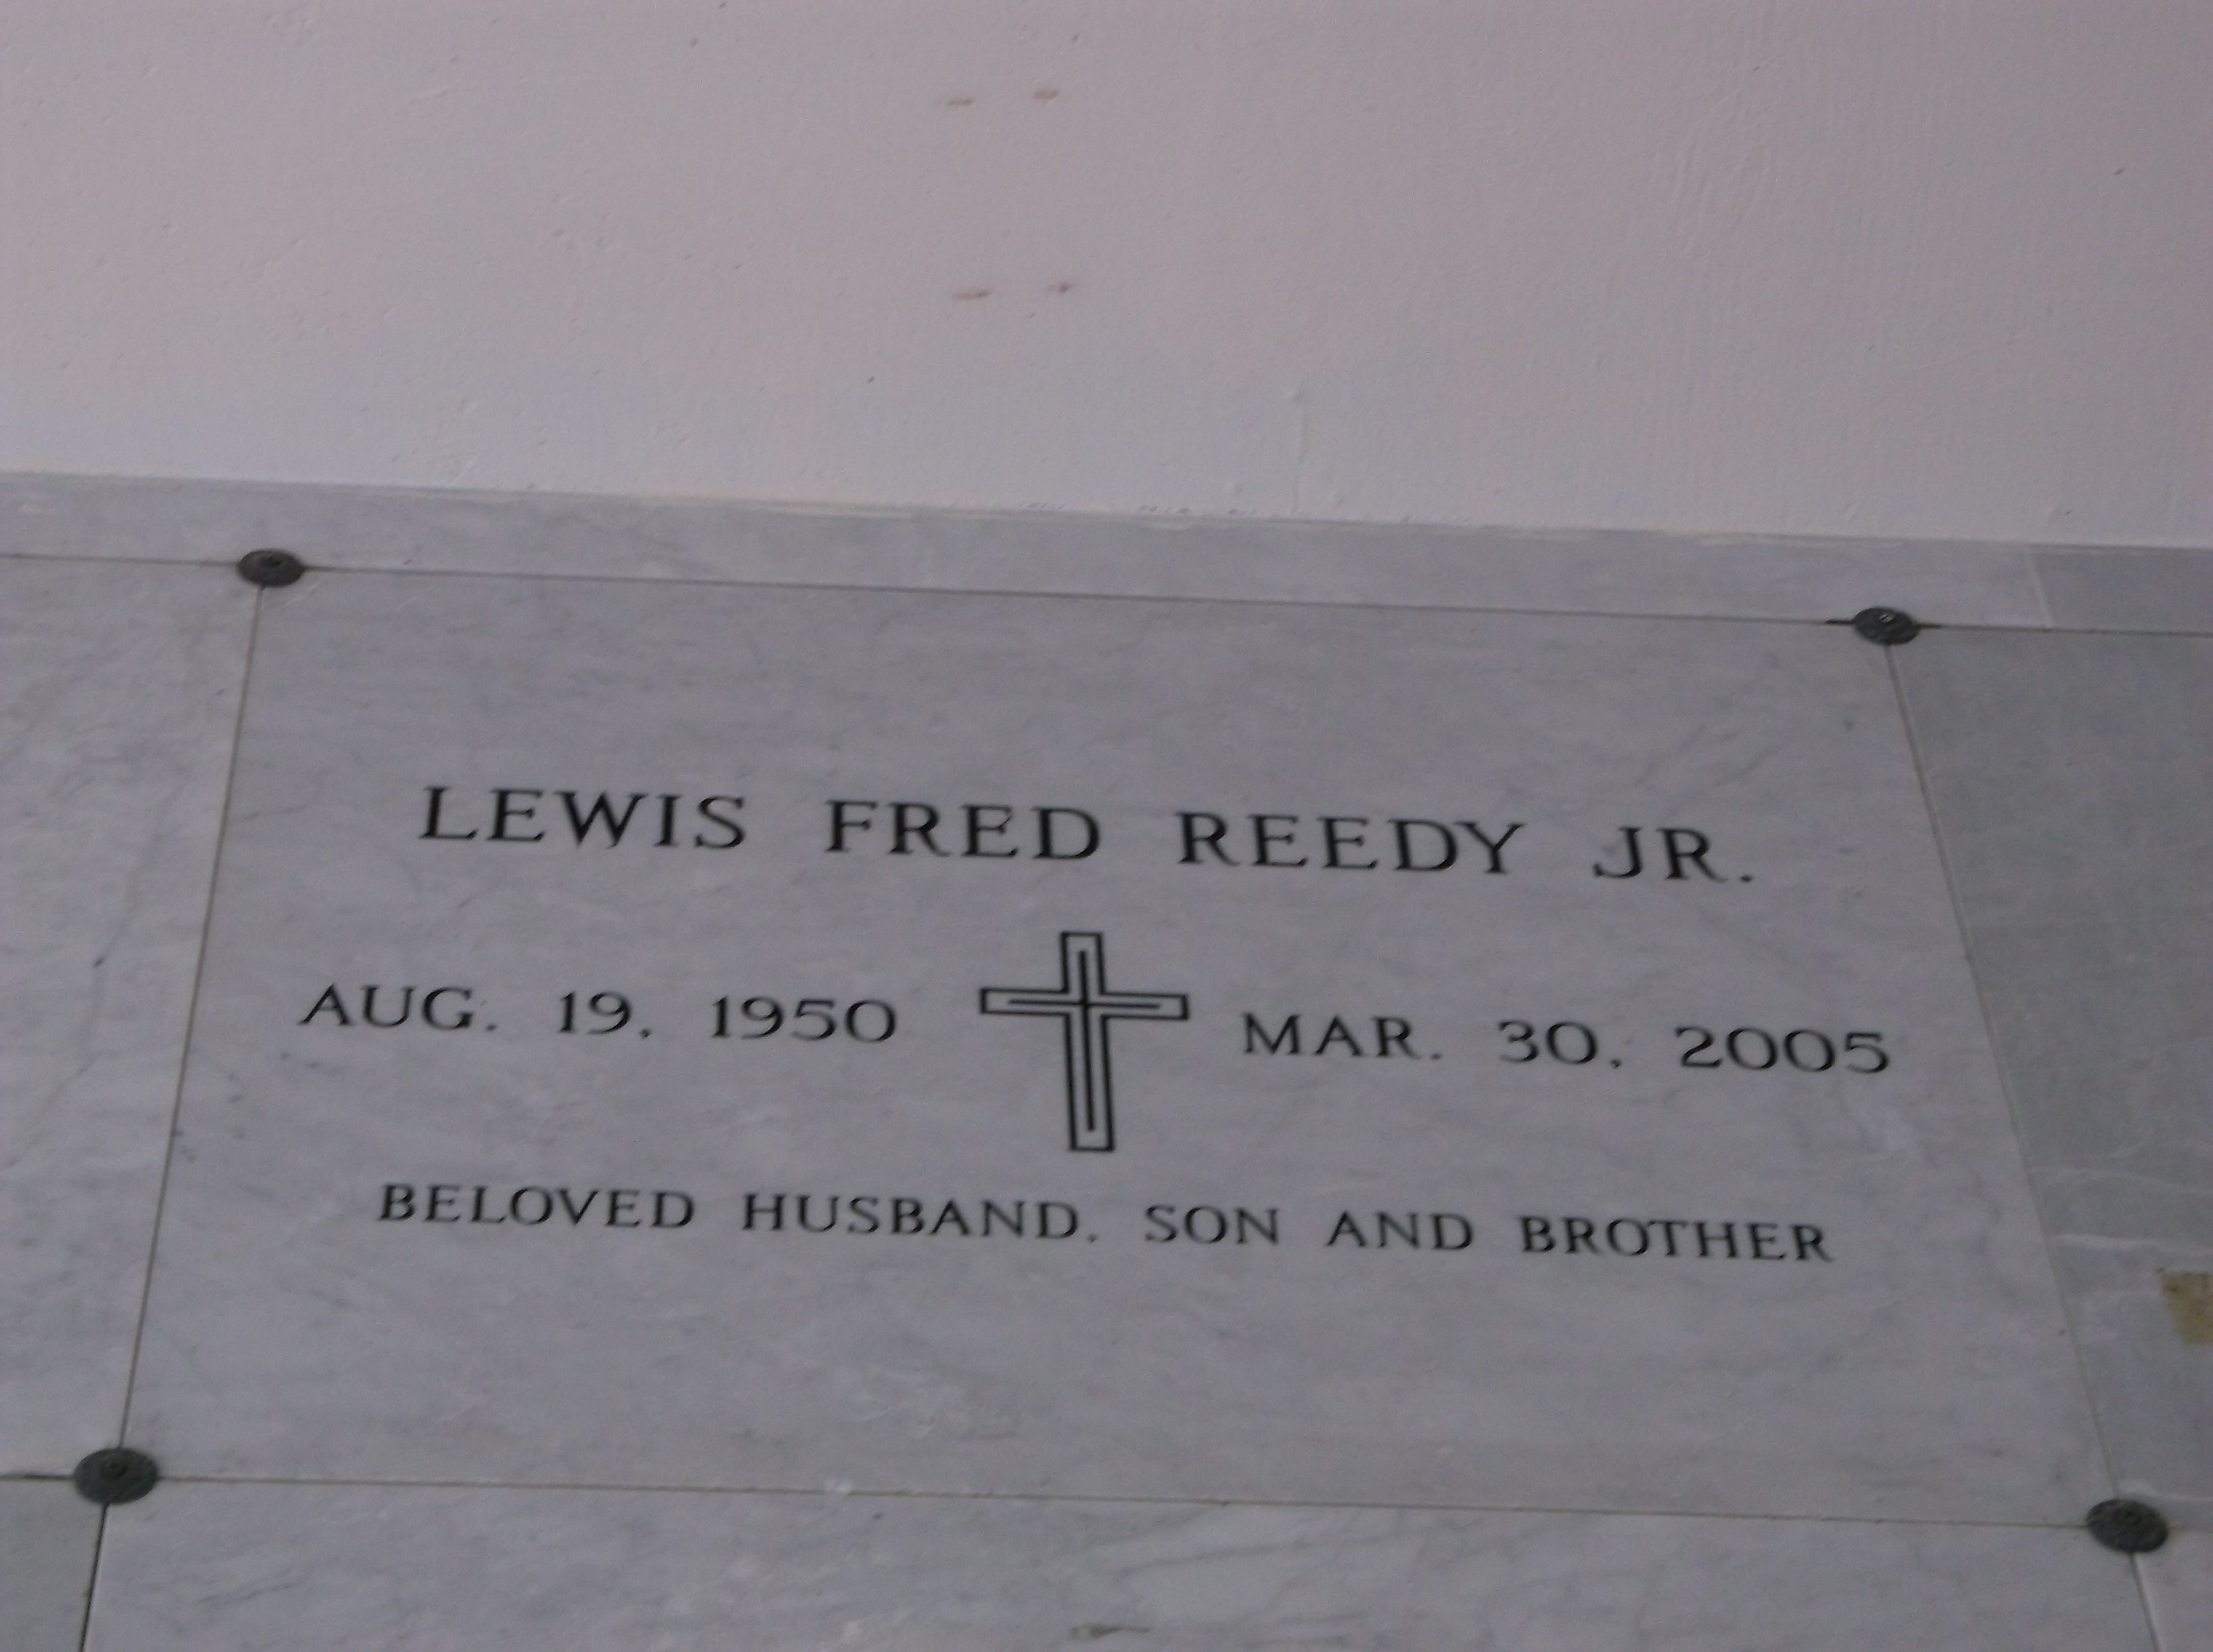 Lewis Fred Reedy, Jr